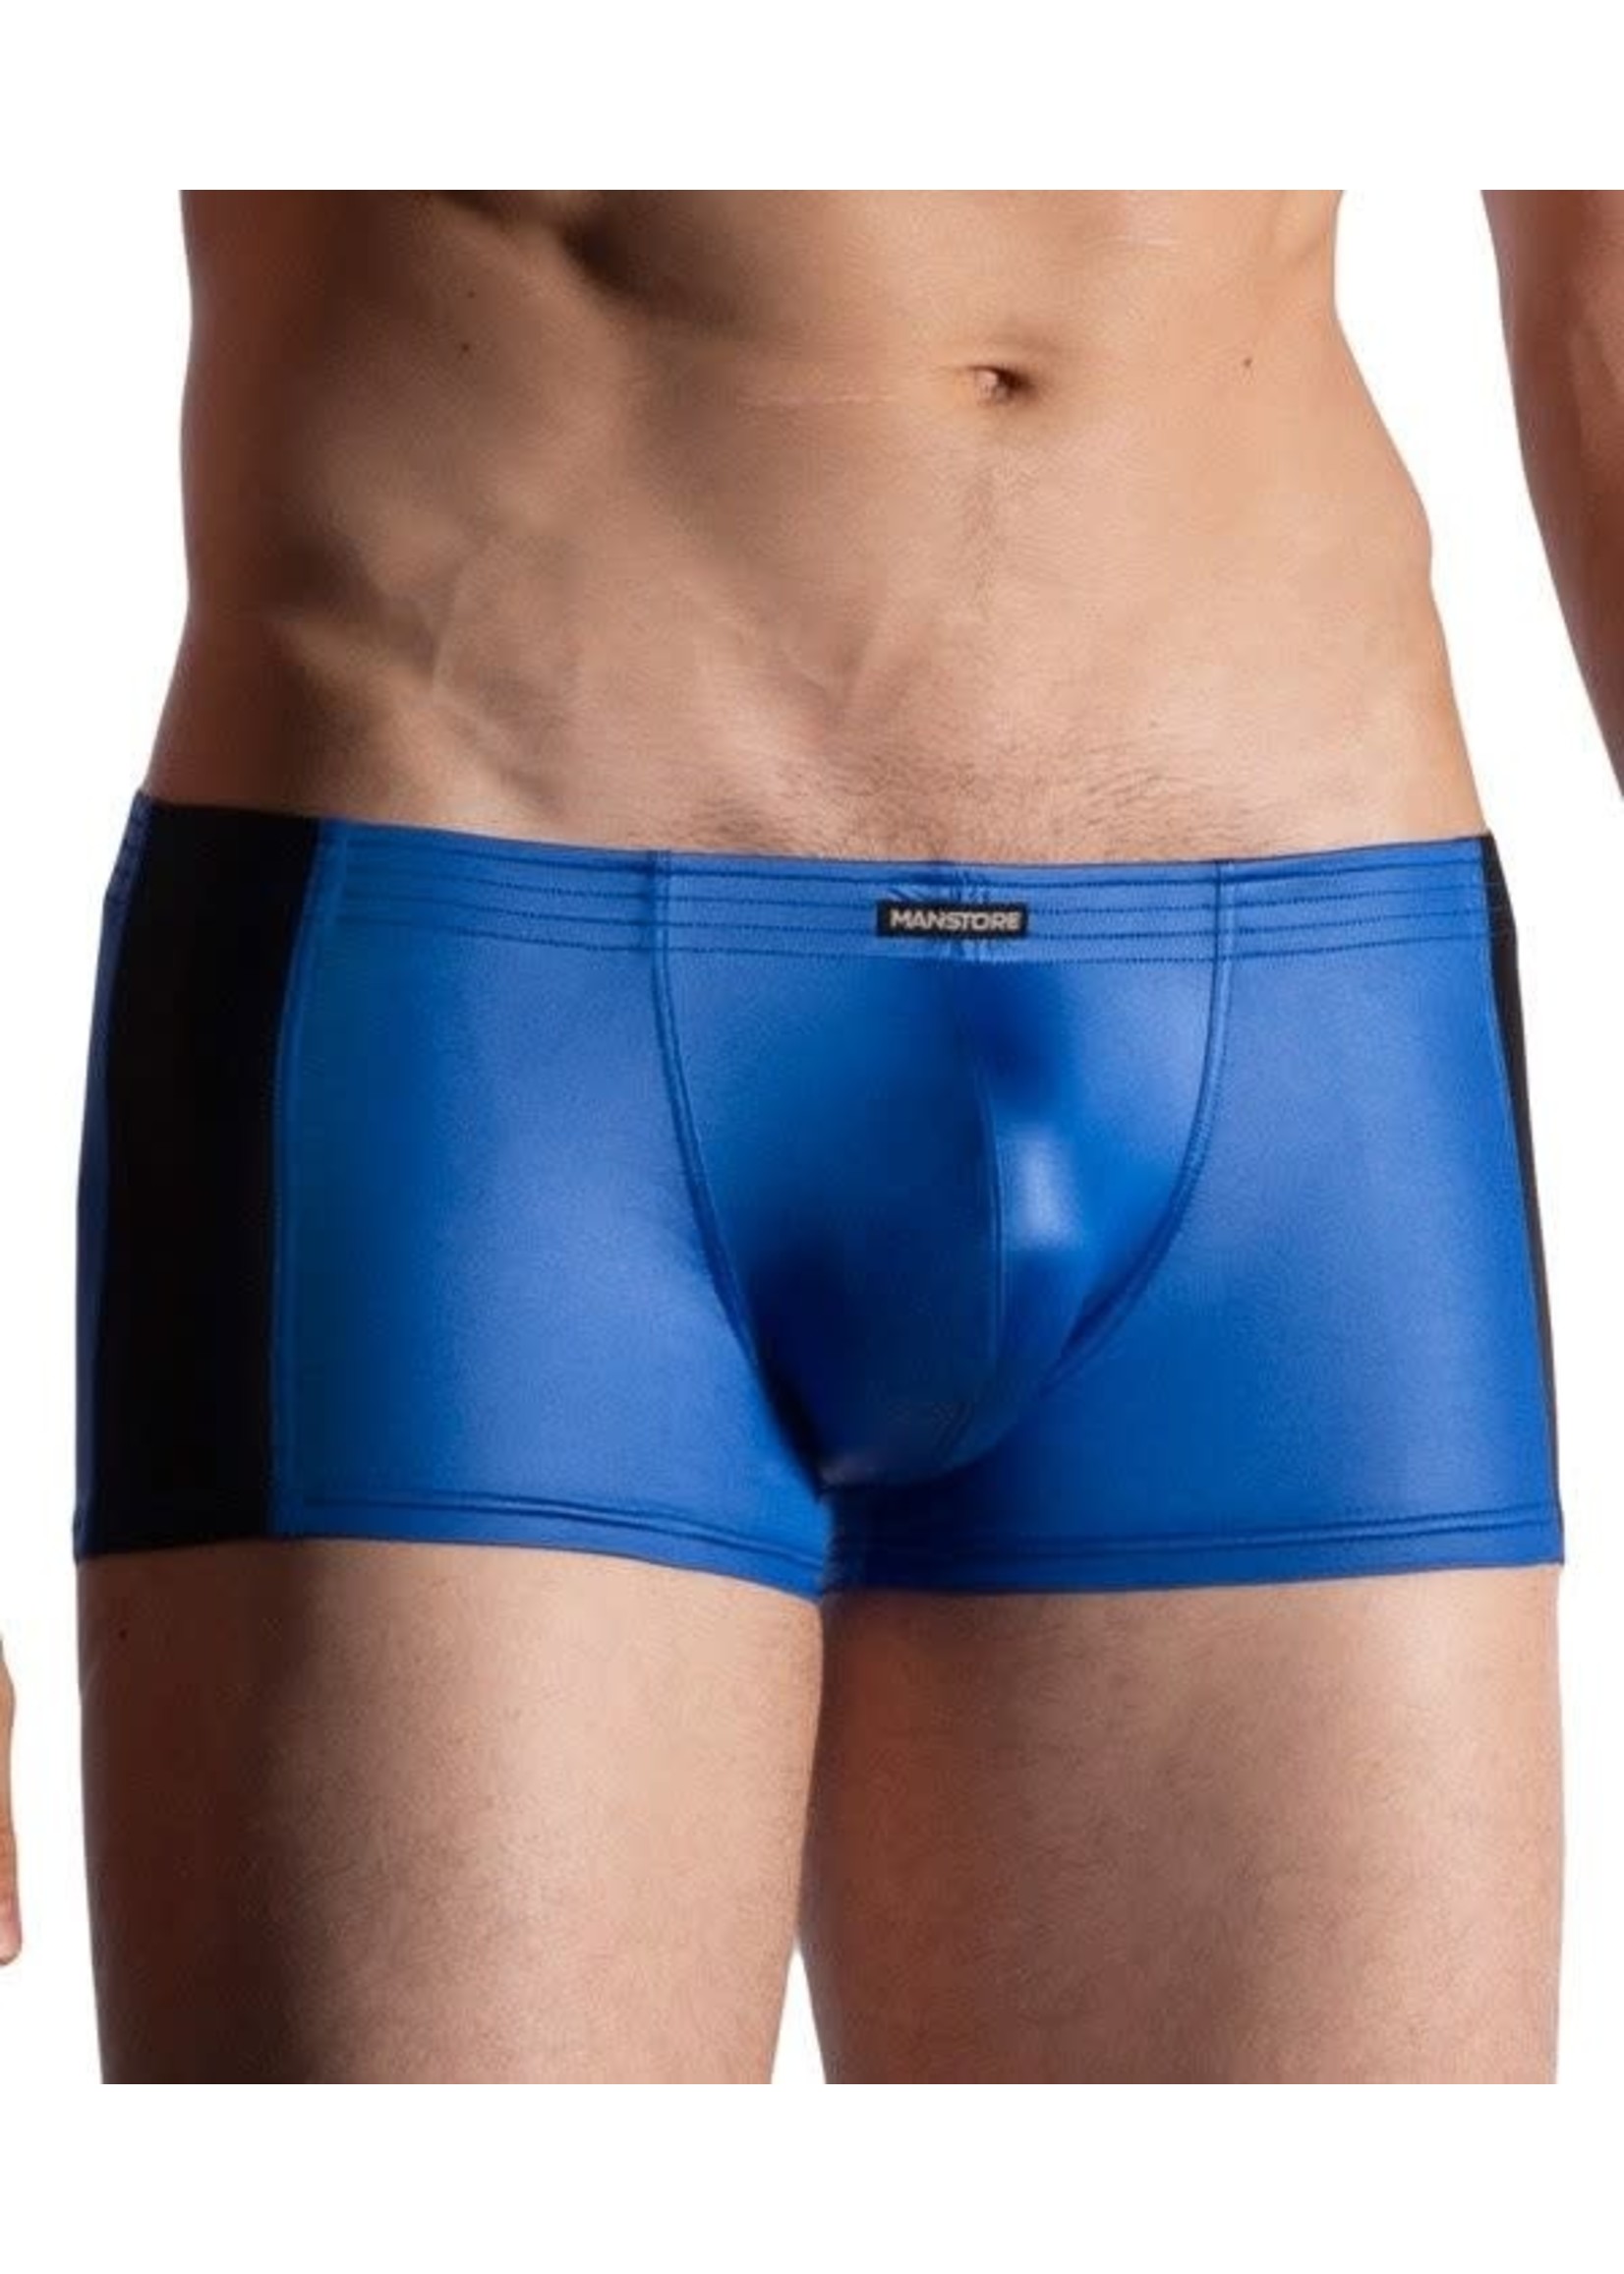 Manstore Mens micro pants 01 blue